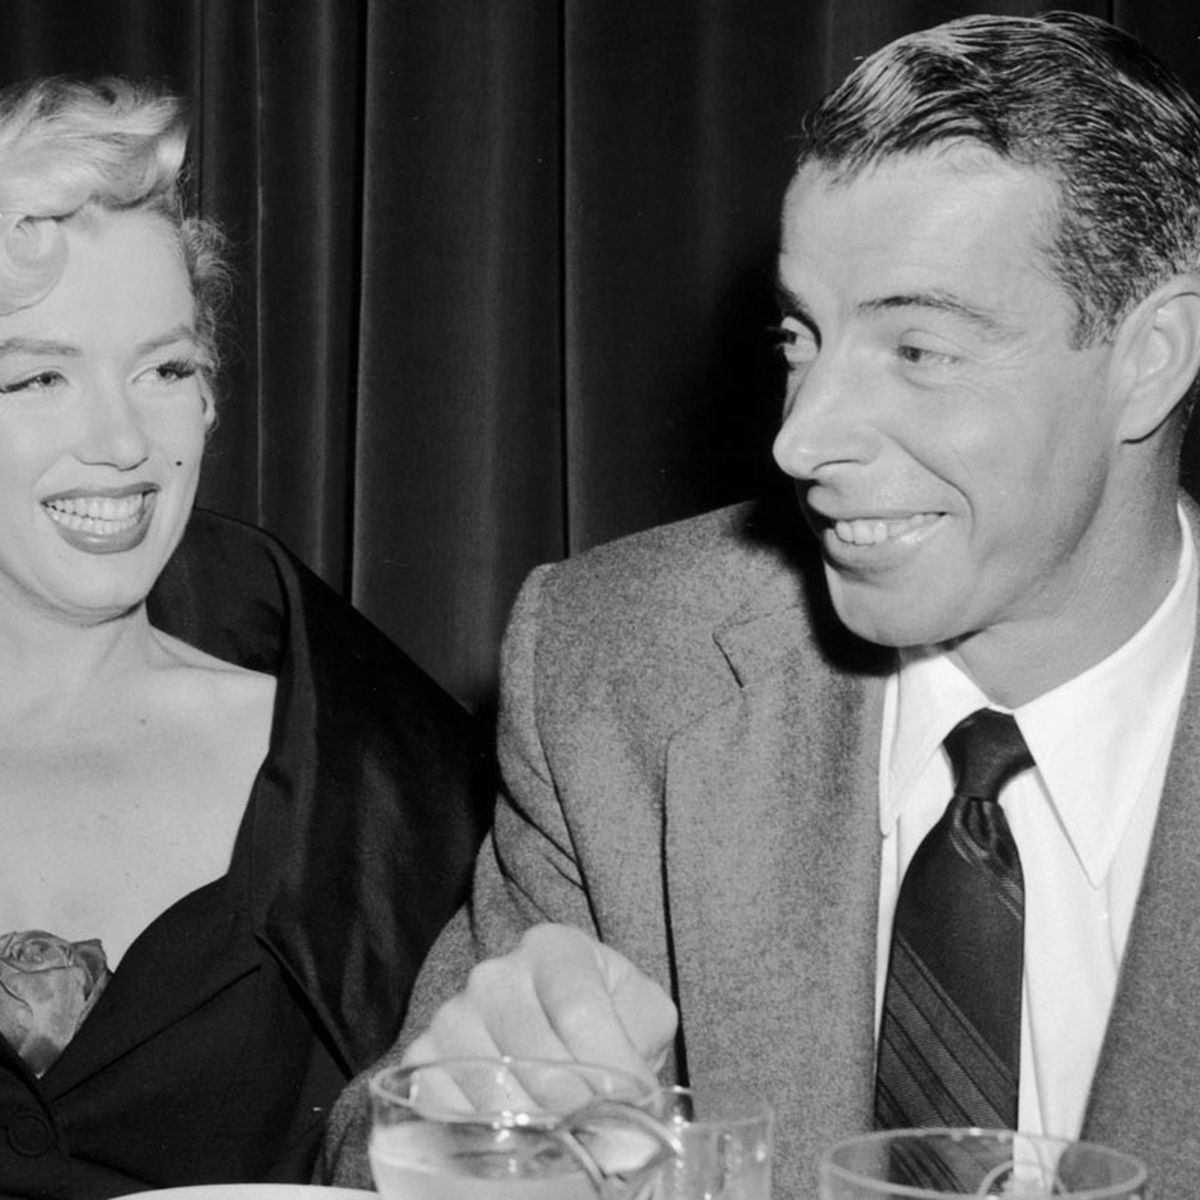 Actress Marilyn Monroe and baseball player Joe DiMaggio just after